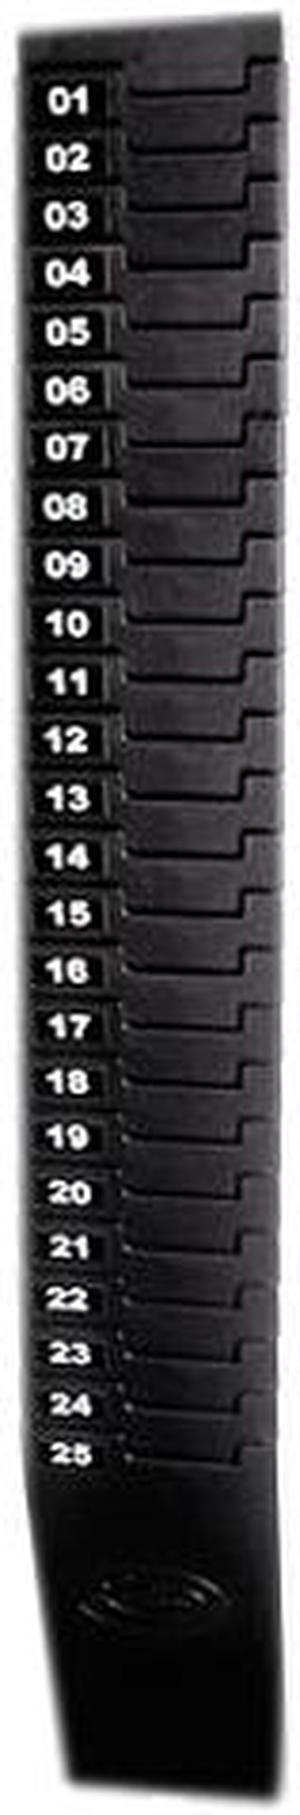 Lathem Time 25-7EX Expandable Time Card Rack, 25-Pocket, Holds Seven Inch Cards, Black Plastic